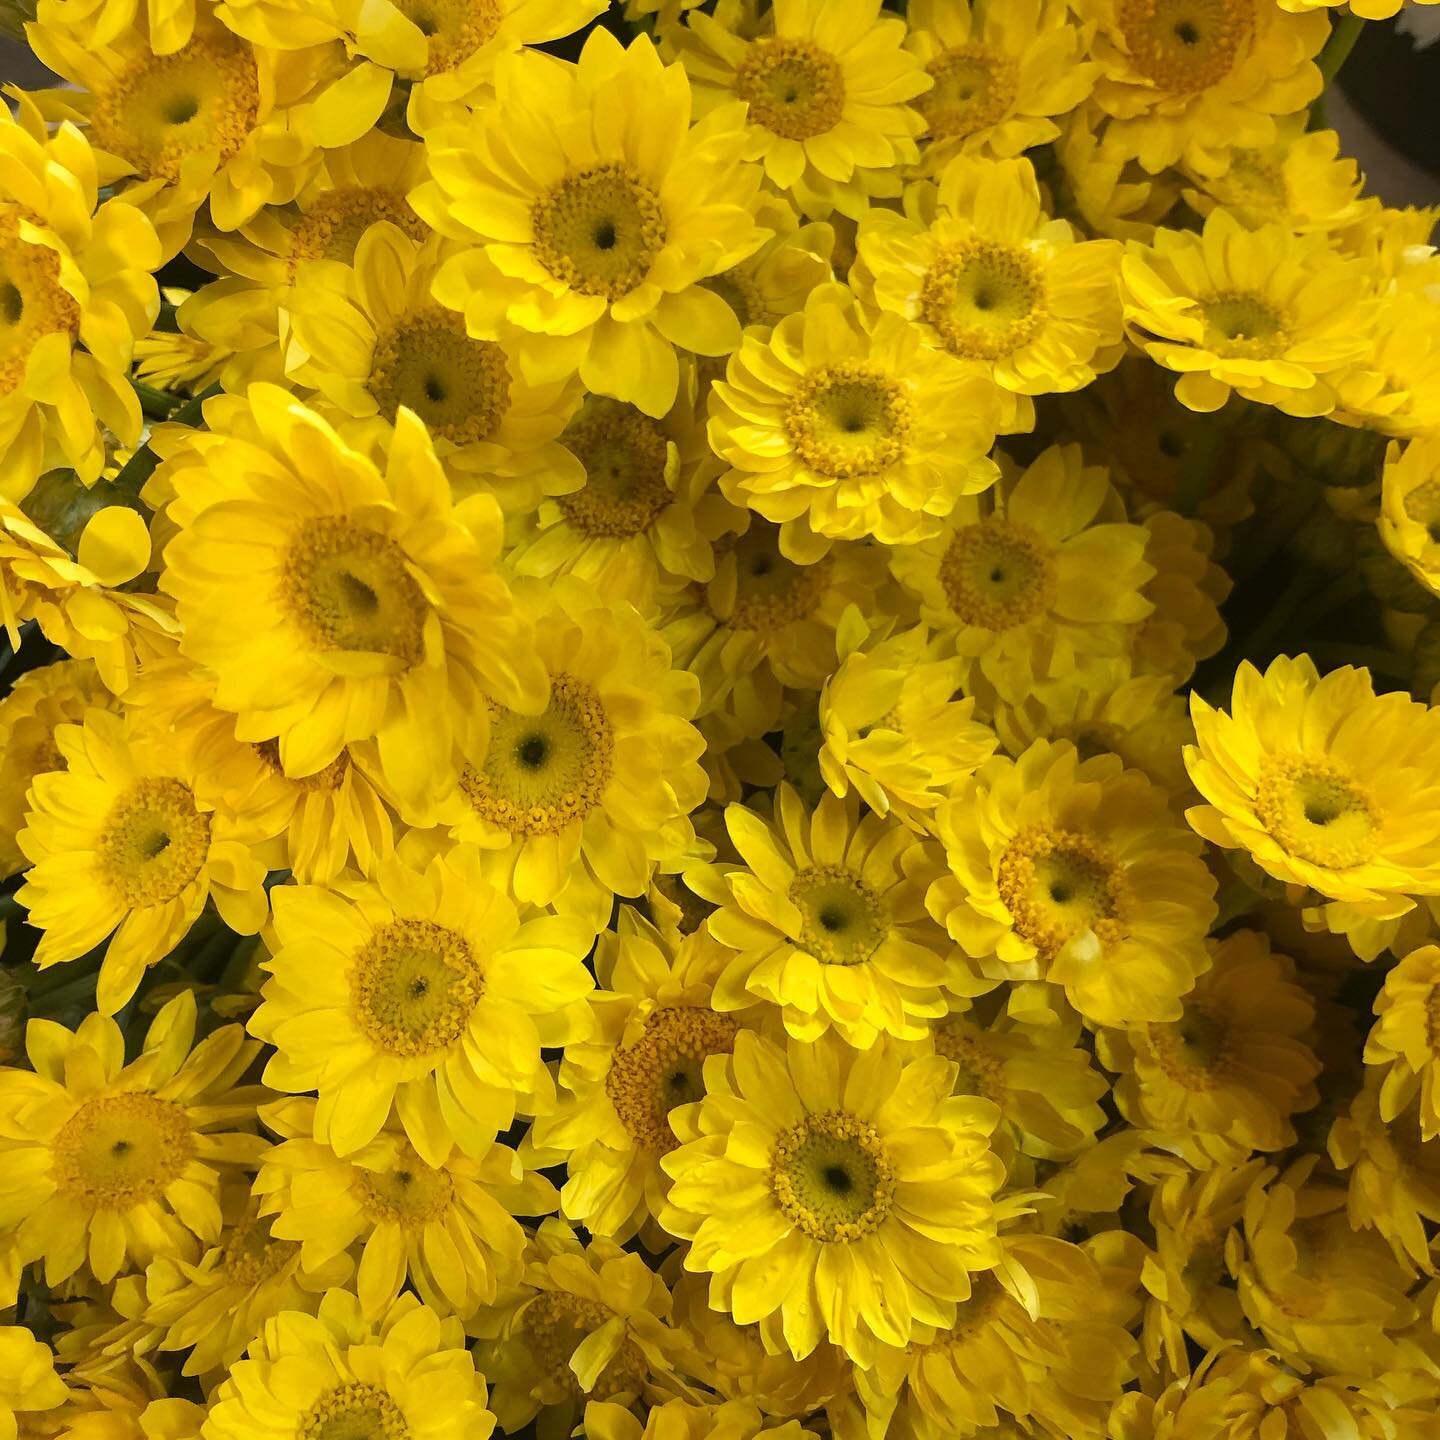 Today #onthefarm #australianflora #schoenia #rhodanthe #telopea #boronia #actinotushelianthi #waitzia #ptilotus #eastcoastwildflowers #sydneyflowermarket